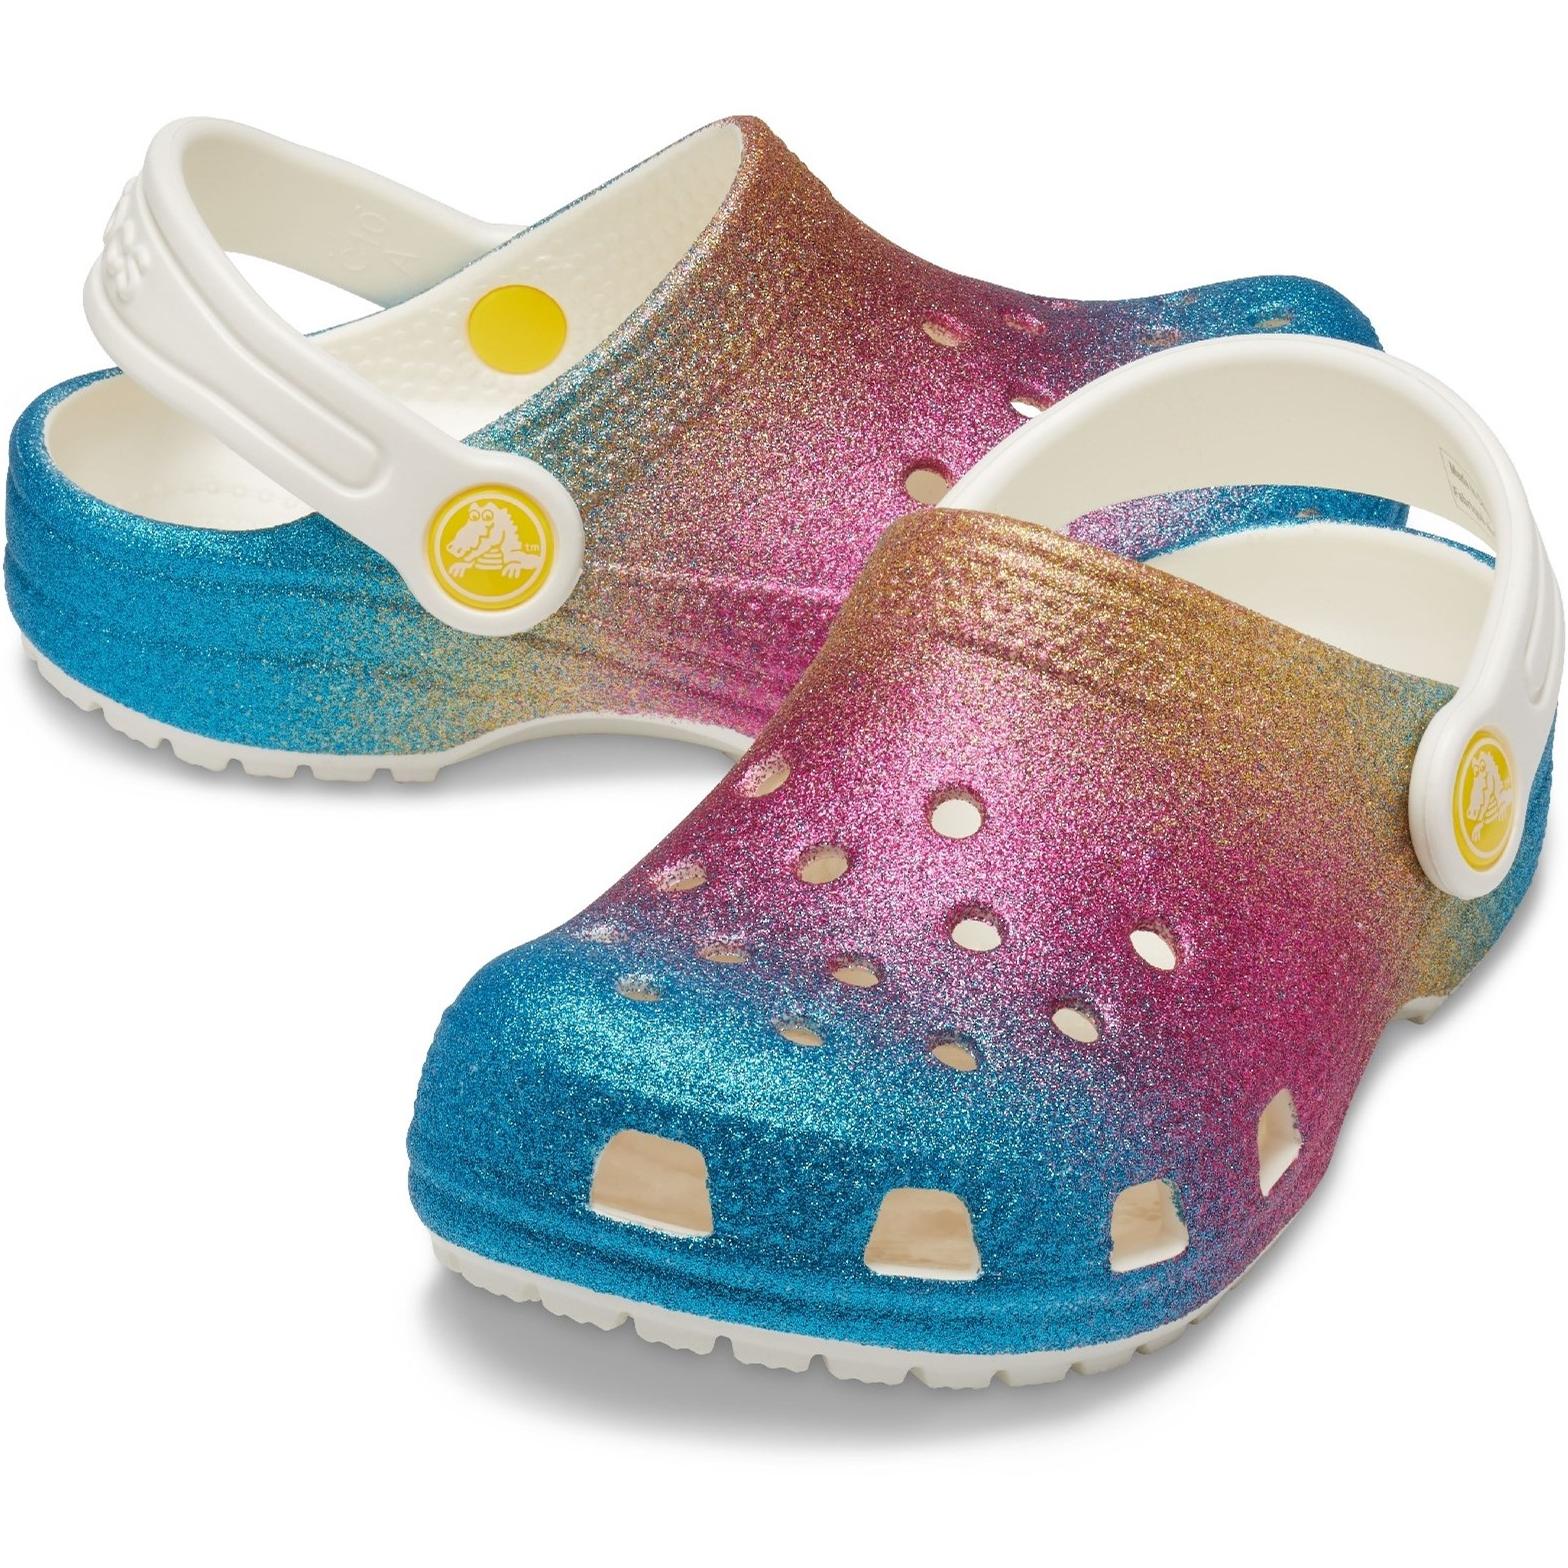 Crocs Kids Ombre Glitter Classic Clog Shoes